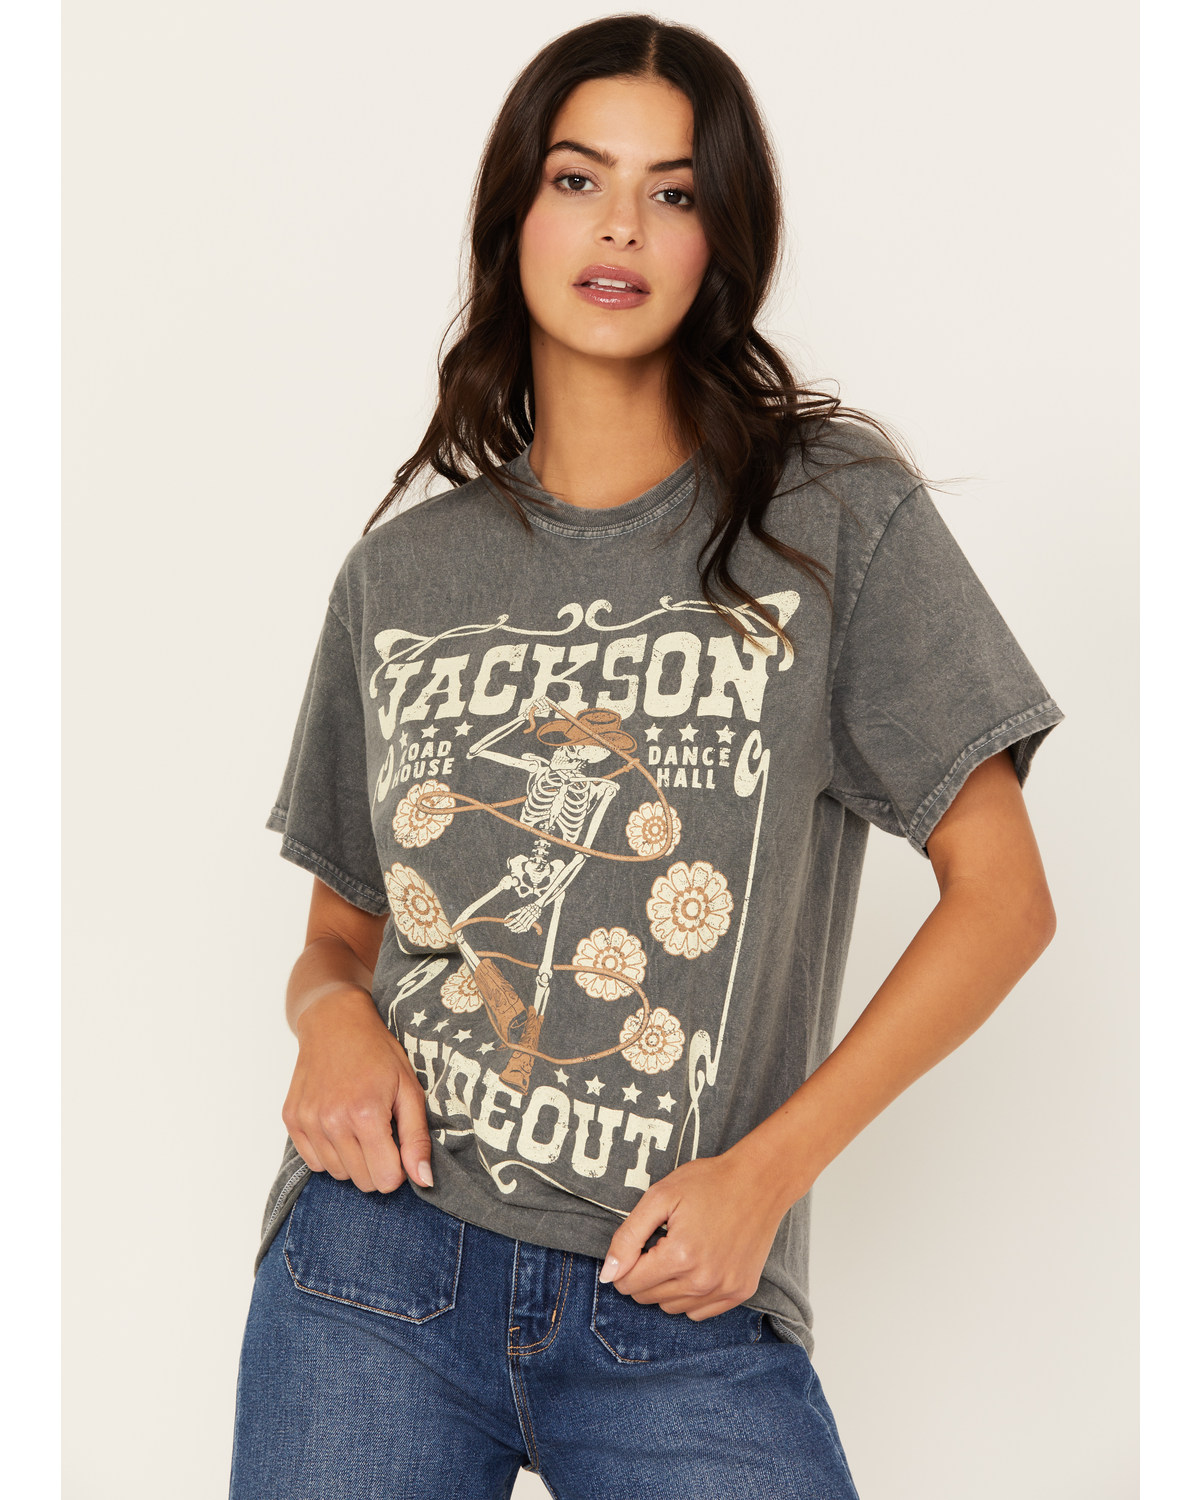 Youth Revolt Women's Jackson Hideout Skeleton Short Sleeve Graphic T-Shirt